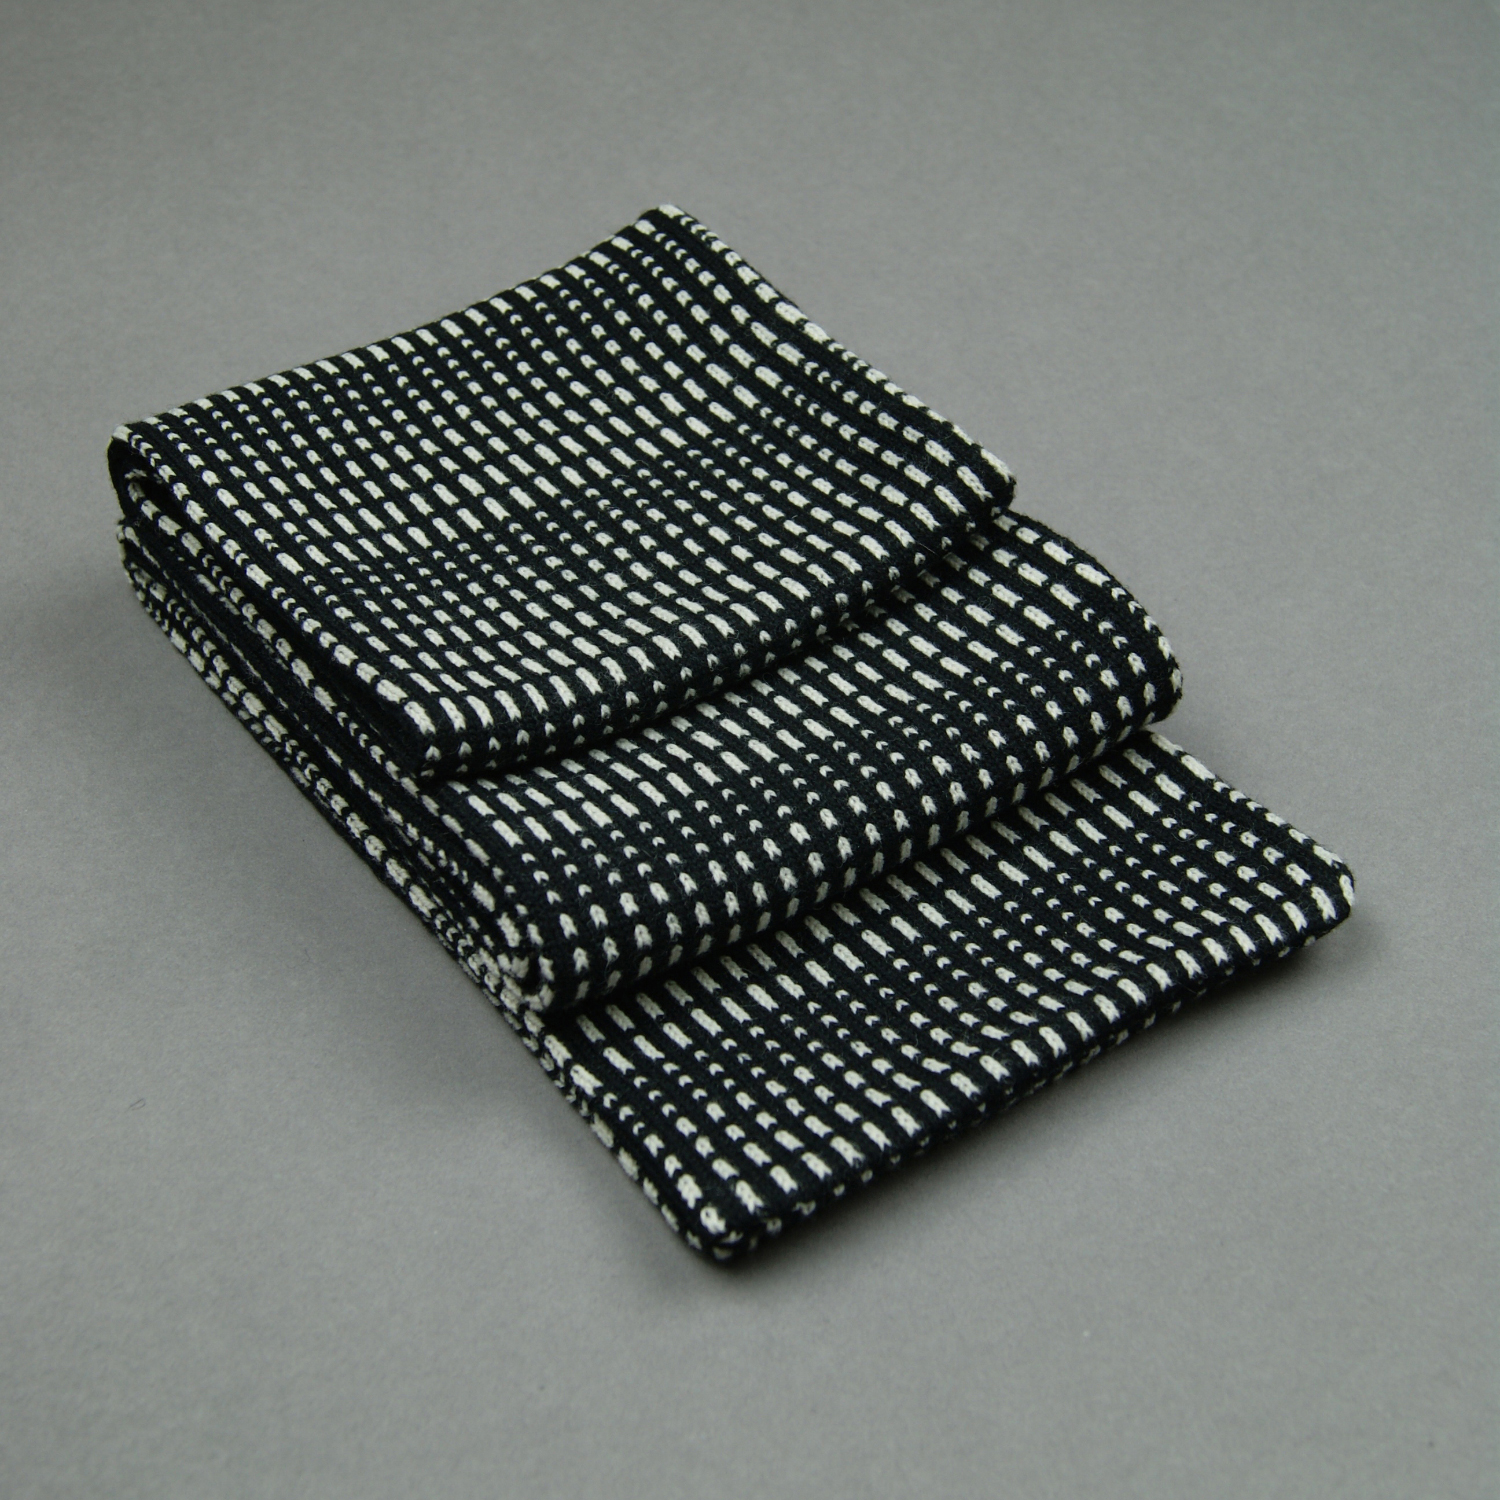 thepatternguild_accessories_knitted_scarf_gradient_black1.jpg